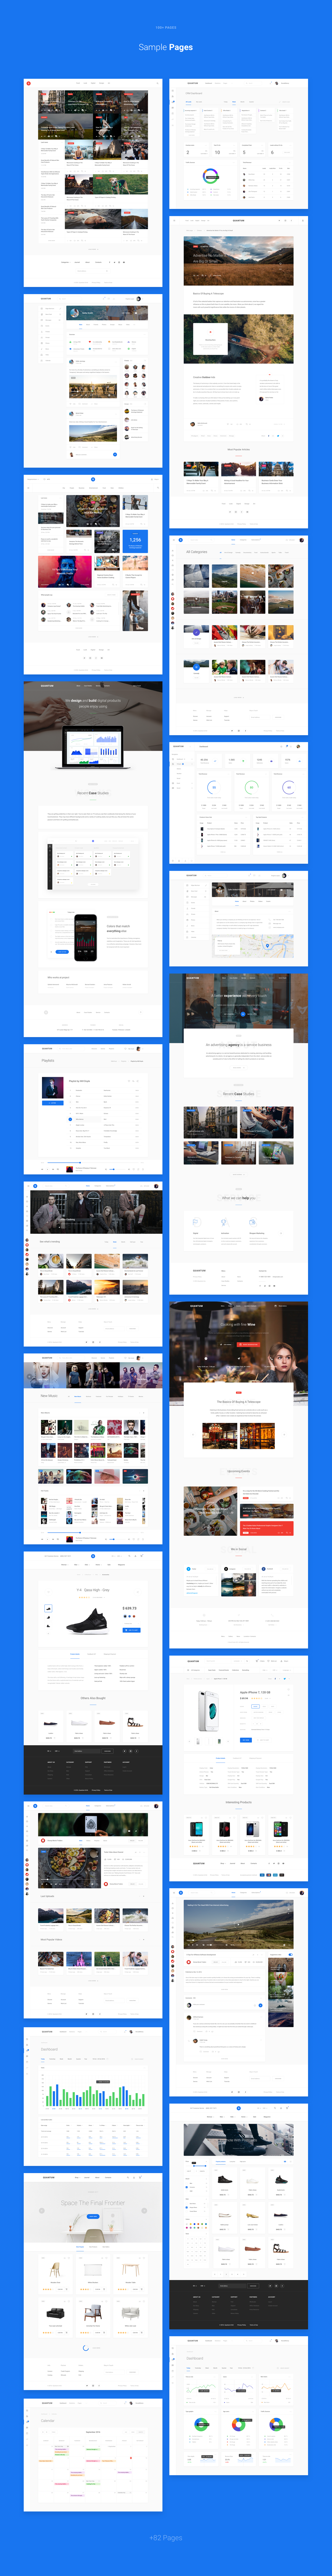 UI ux kit ui kit sketch photoshop commerce dashboard social news